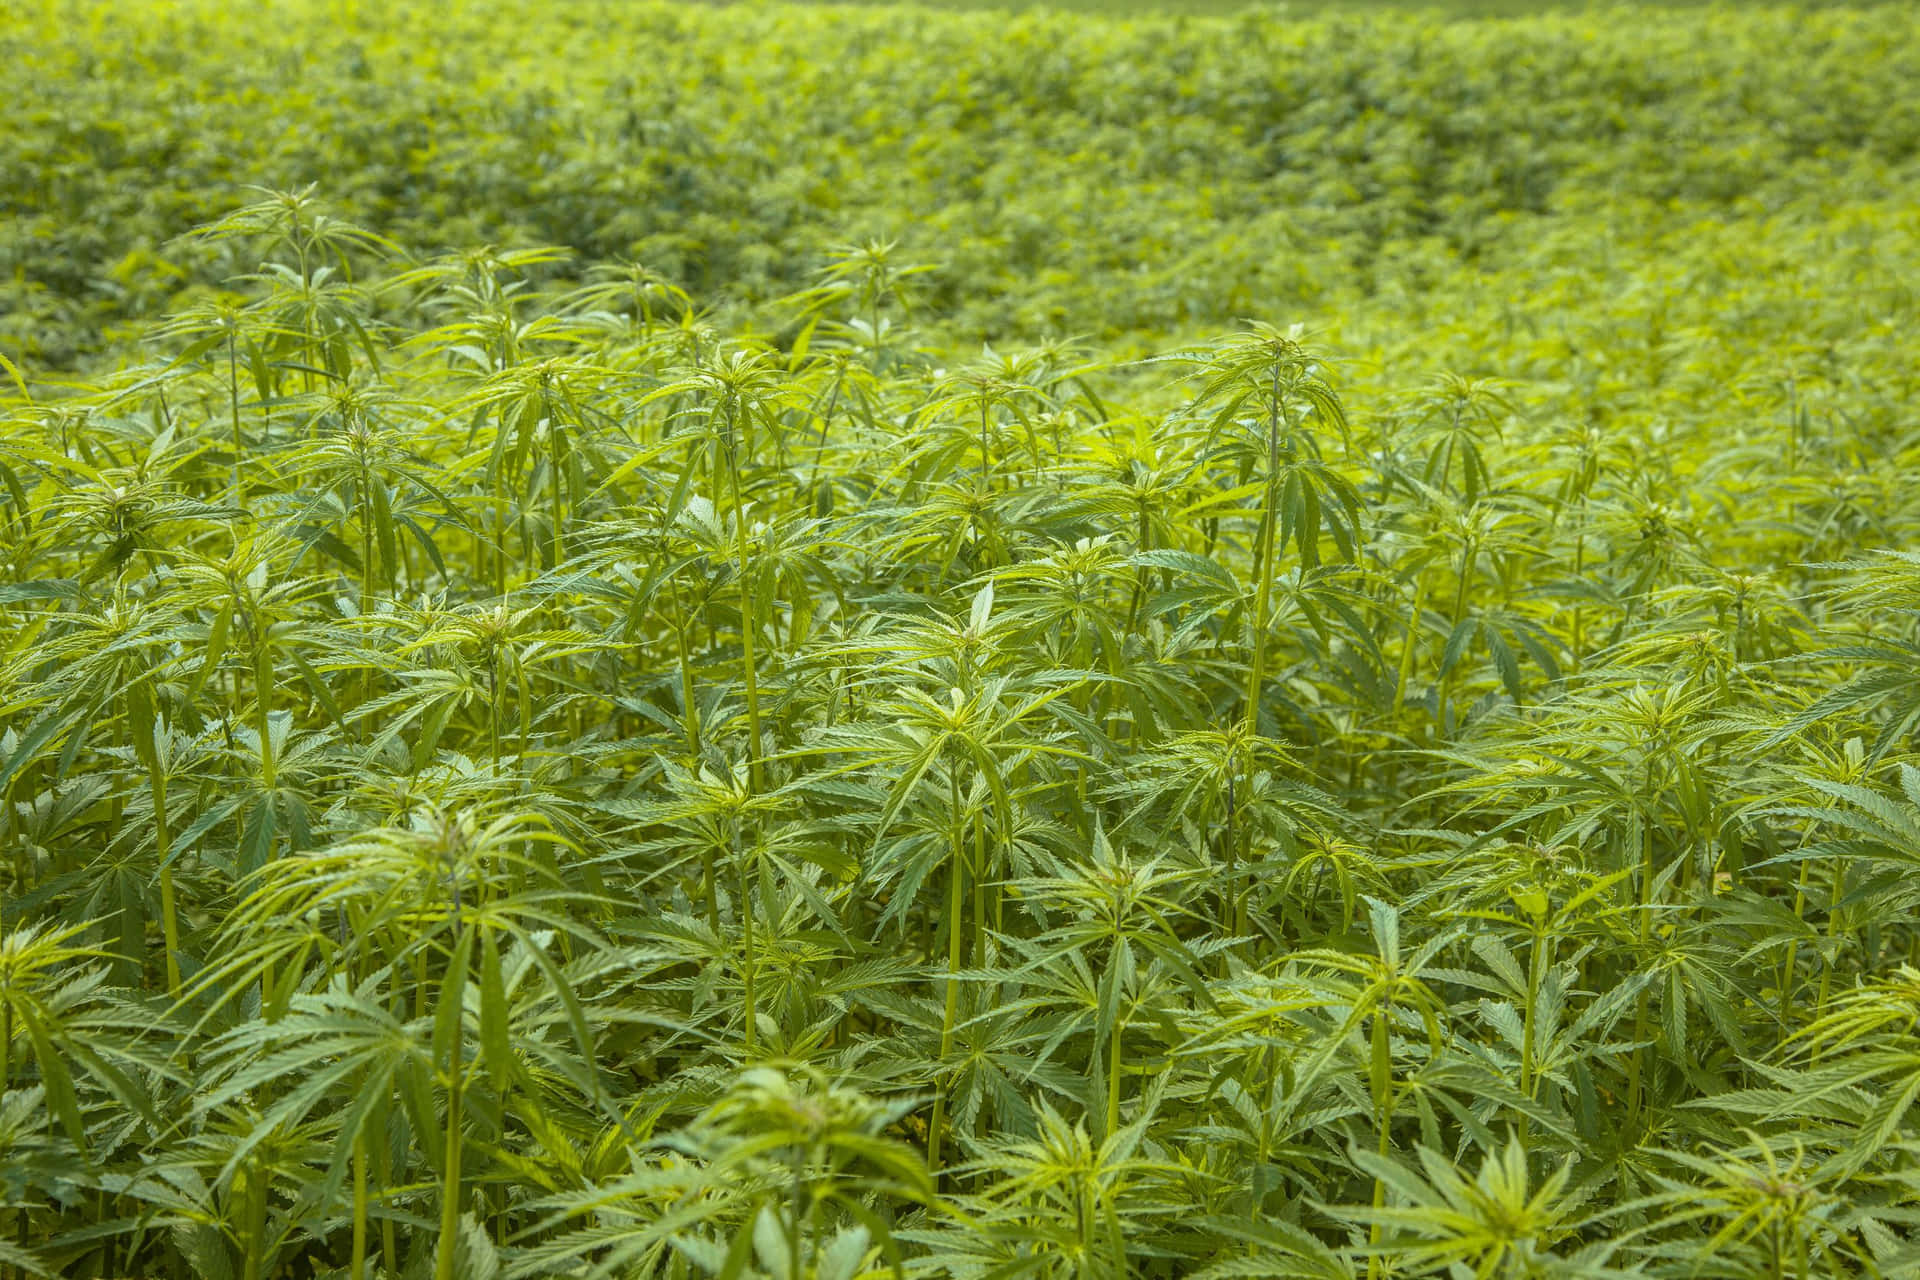 A close-up view of a marijuana plant in beautiful sunlight